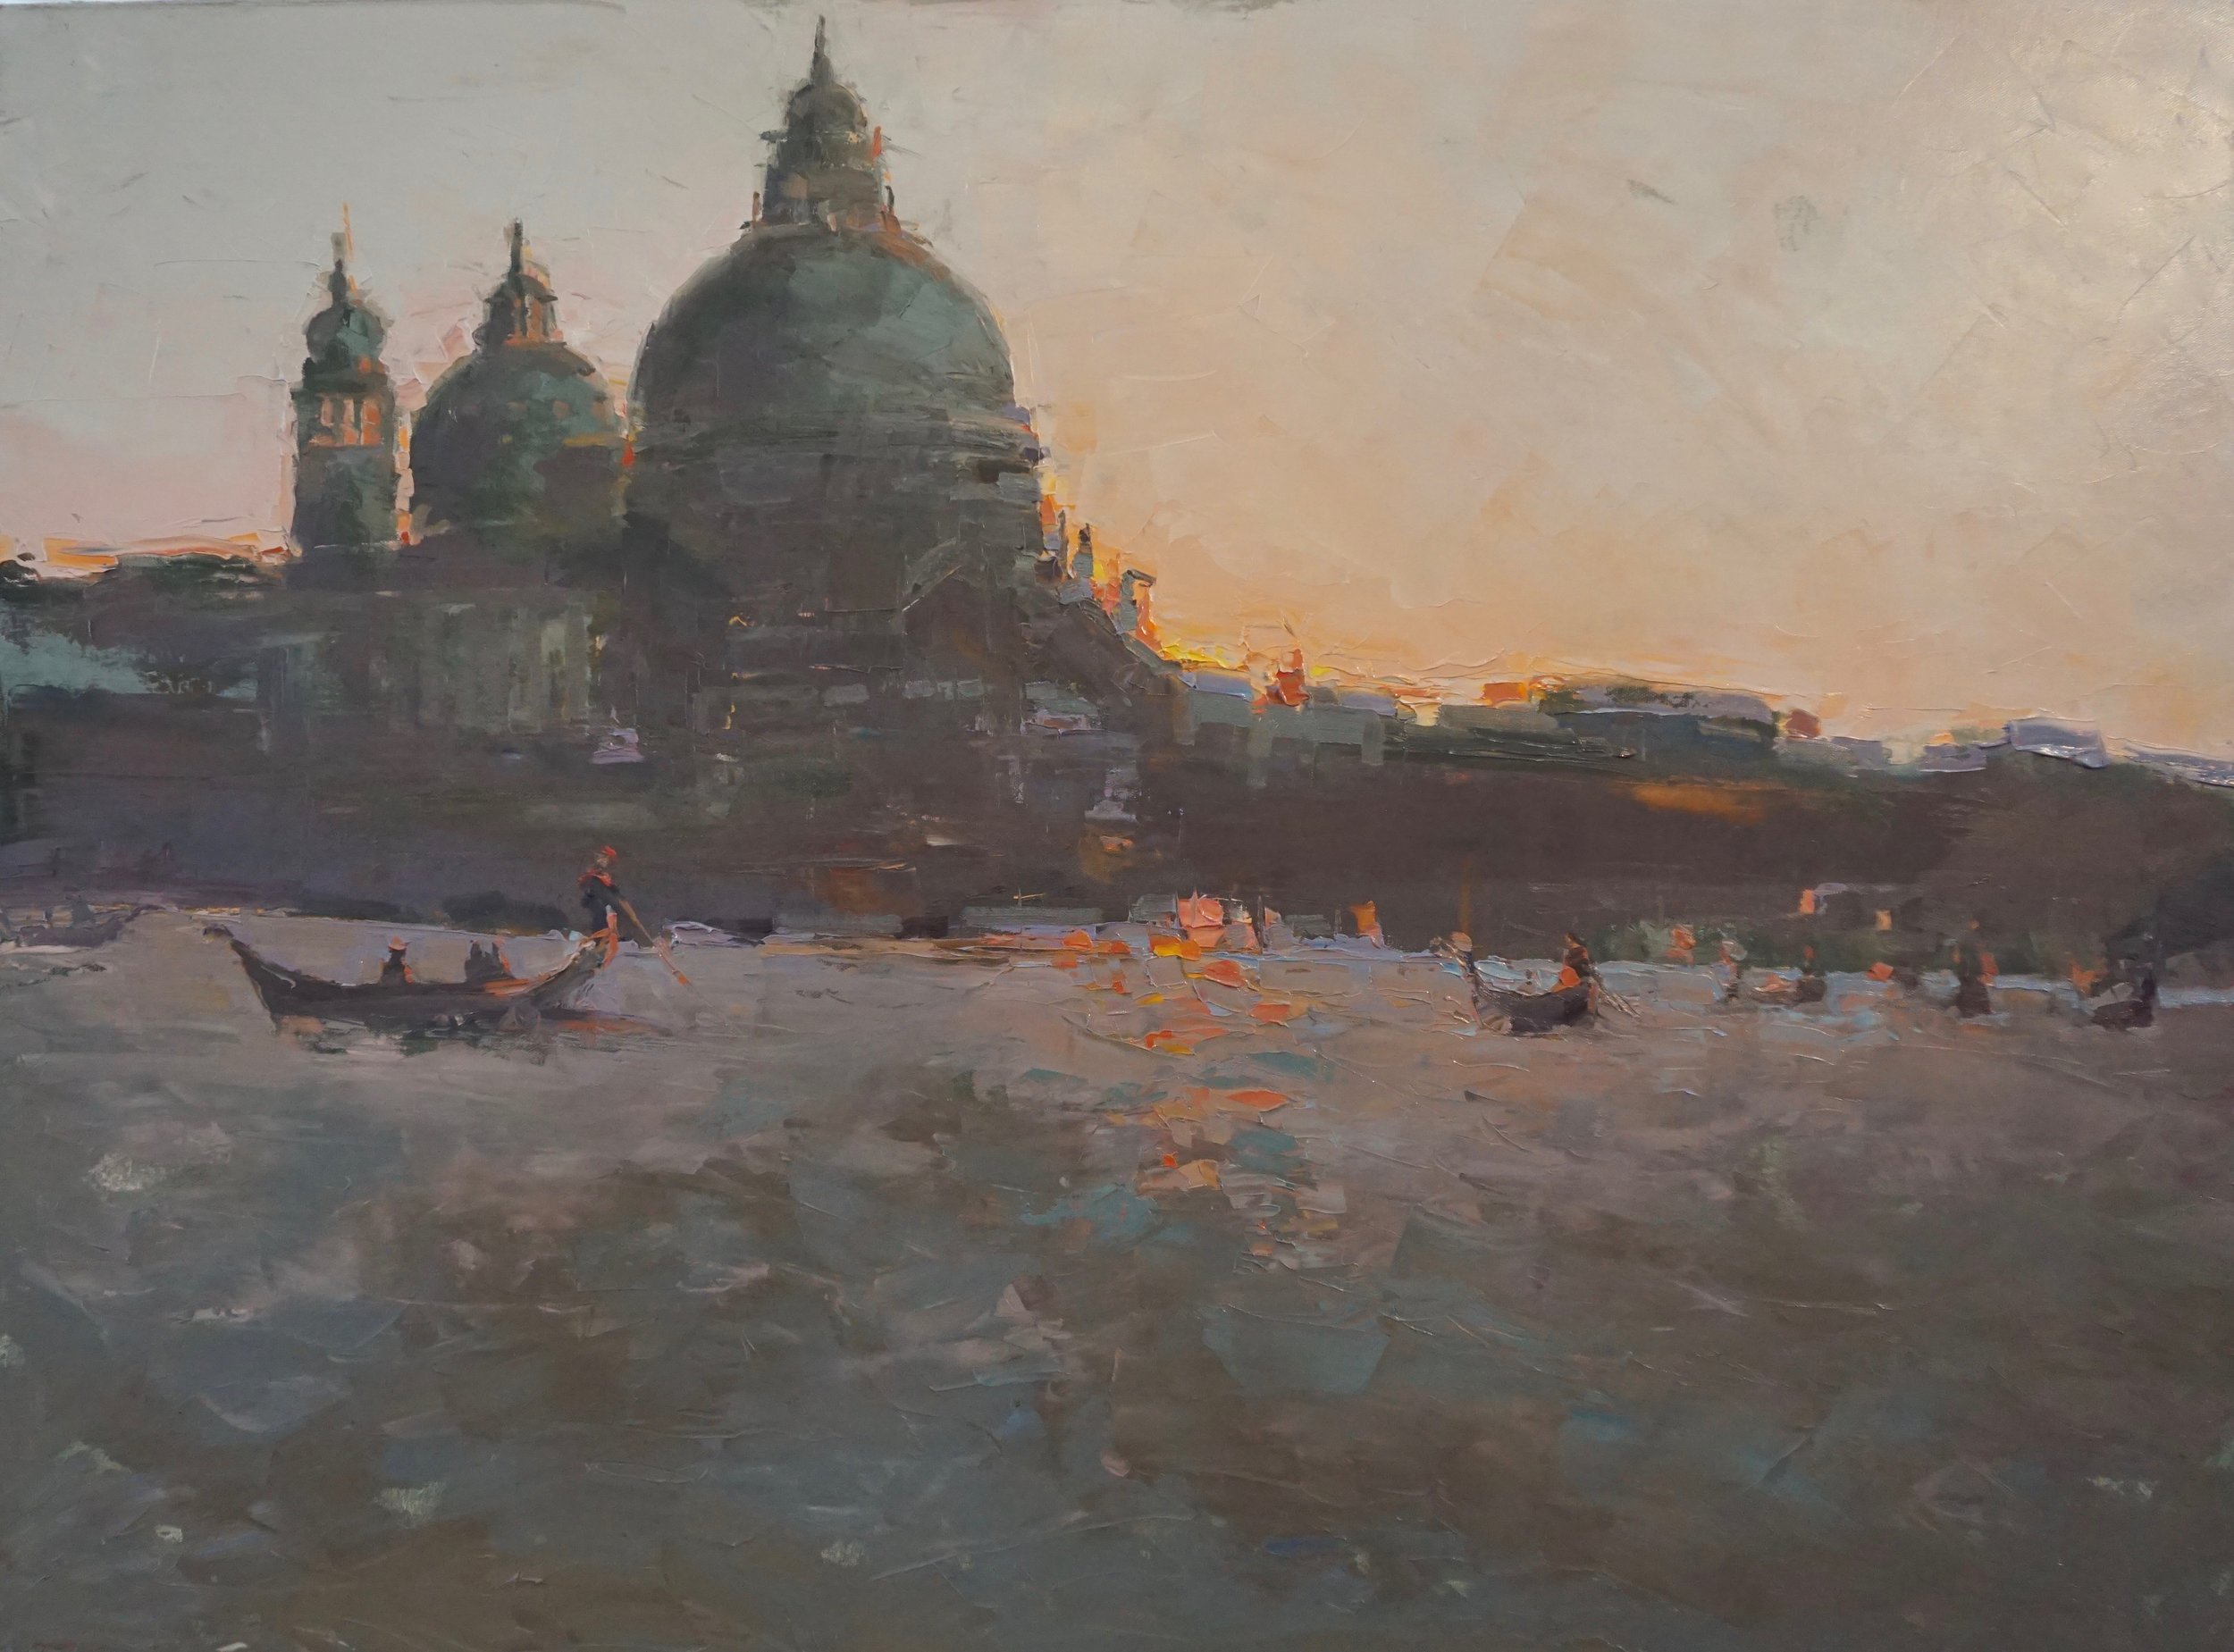 Venice Glow, 2018, oil on canvas, 30%22x40%22, 9800.00, Weber.jpg